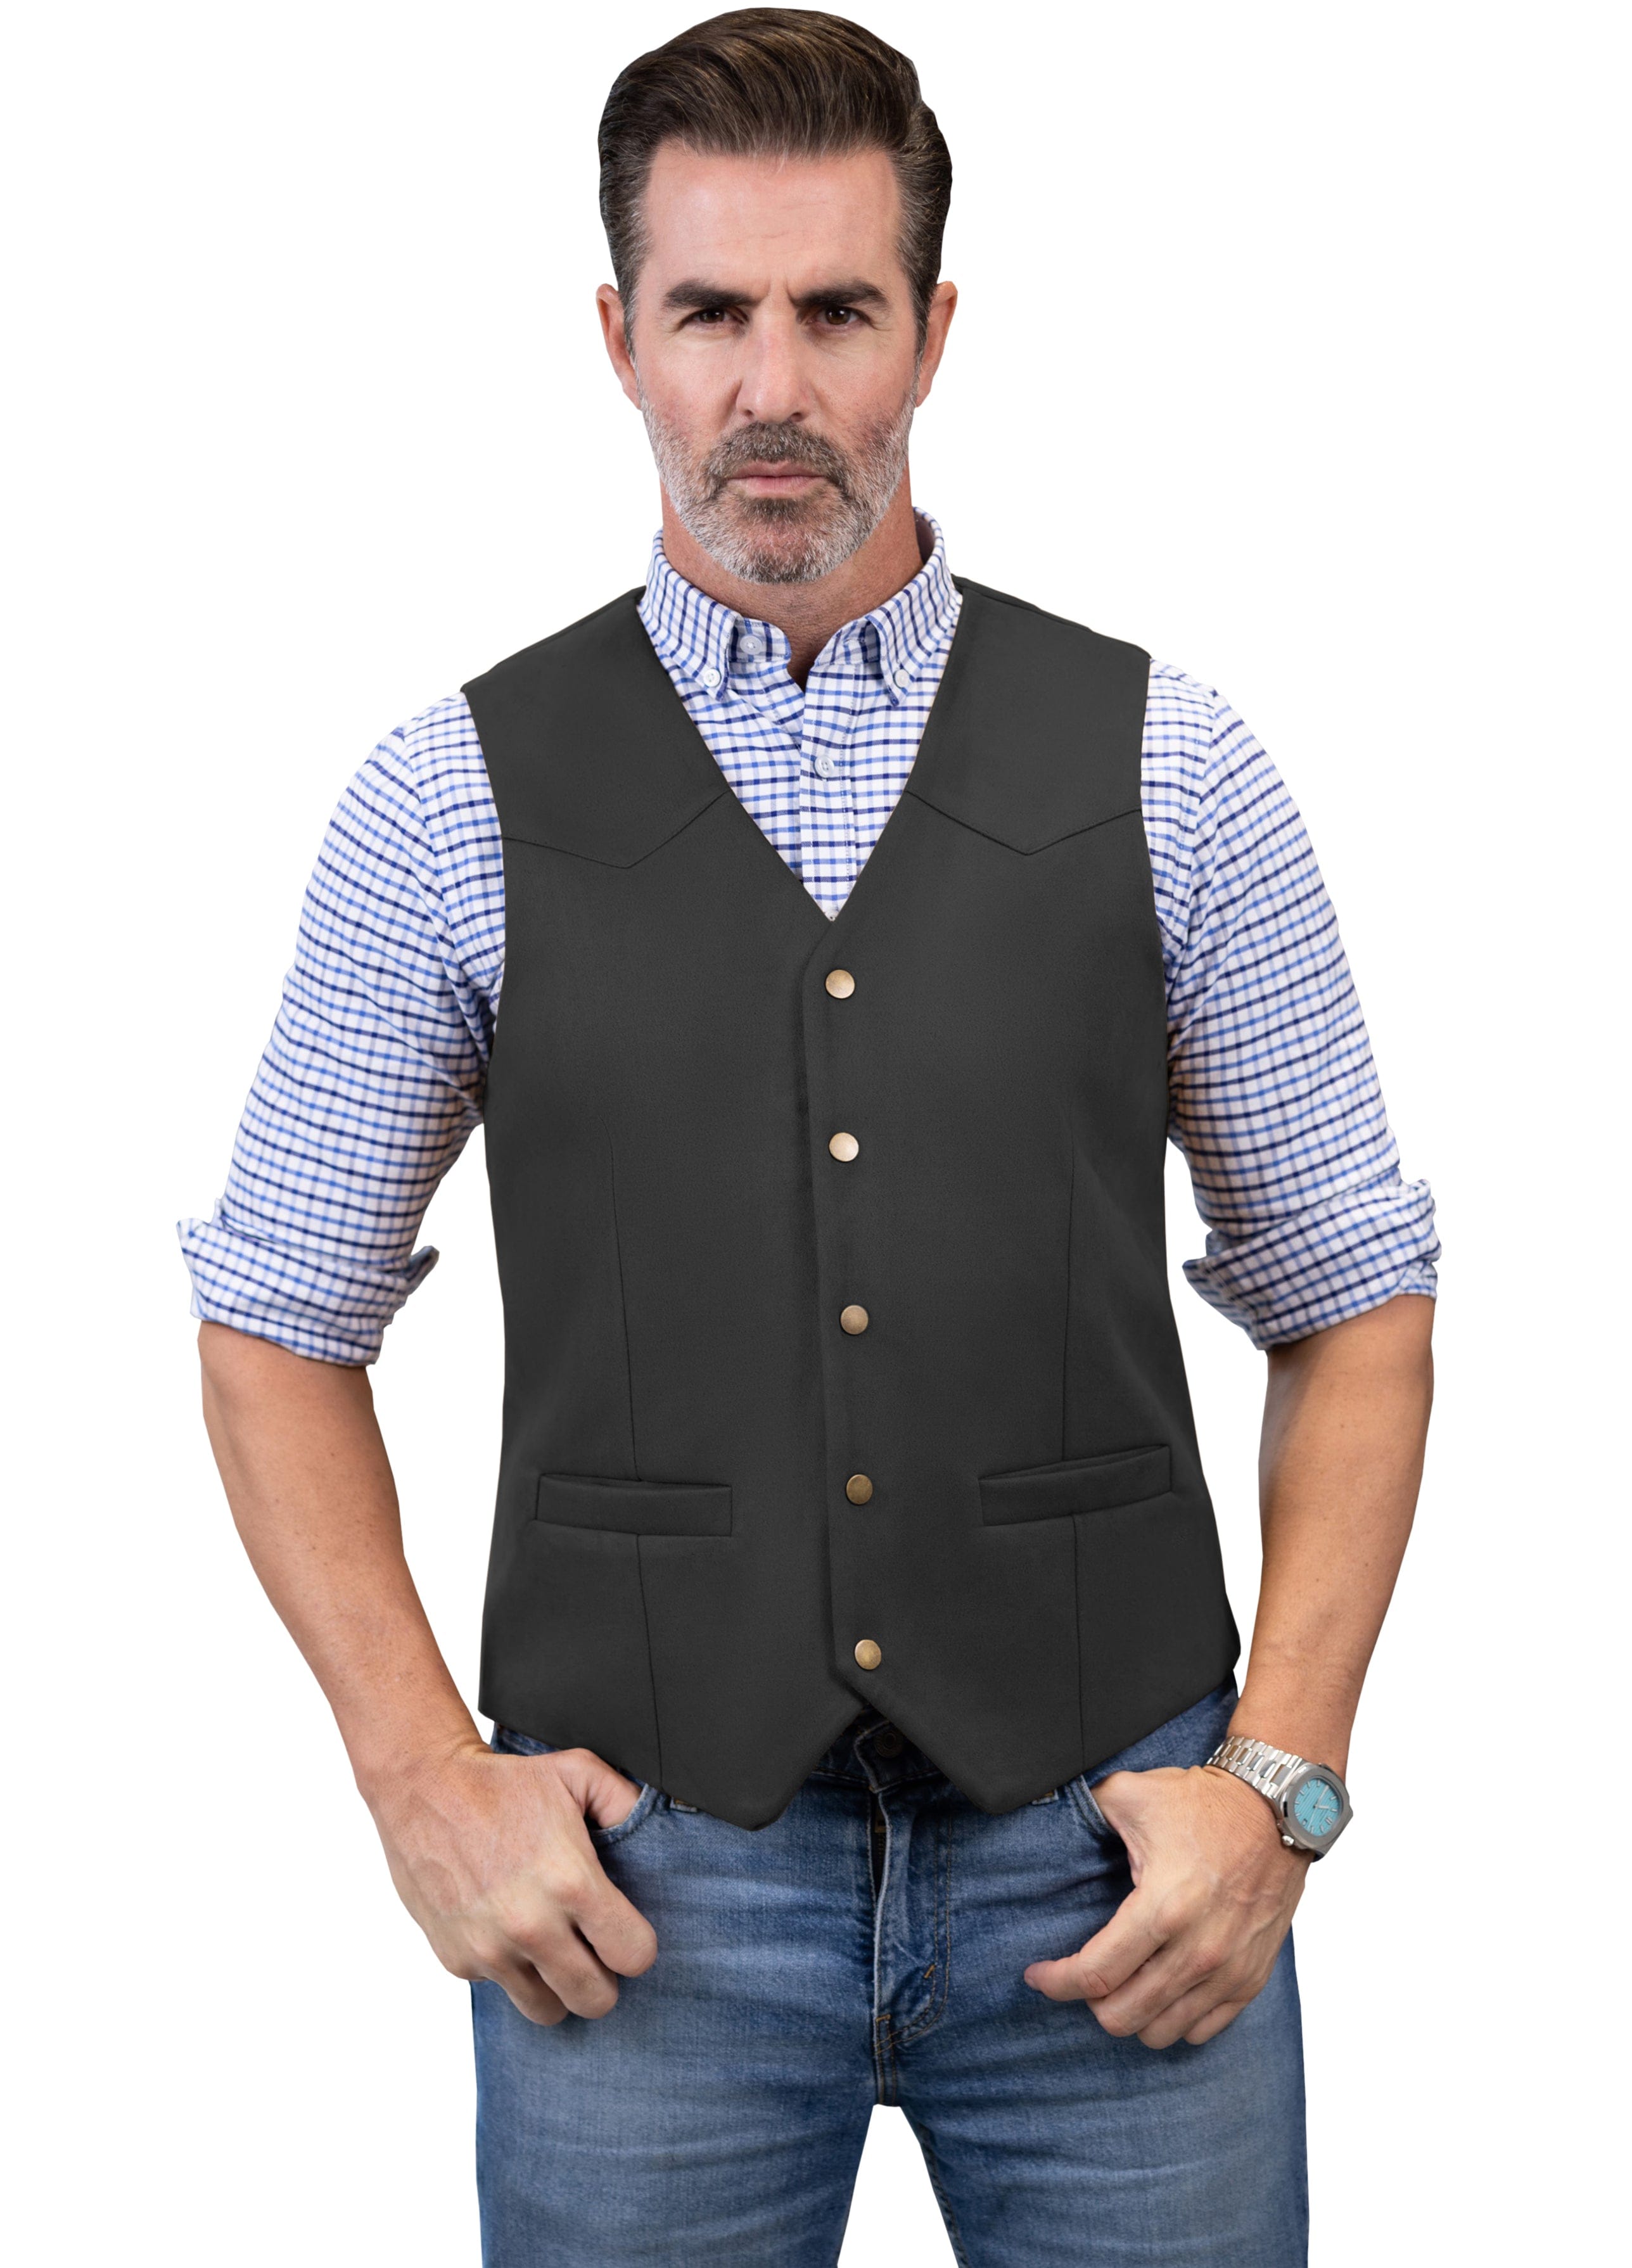 ceehuteey Casual Men's Suede Fashion Cowboy Suit Solid Vest V Neck Waistcoat